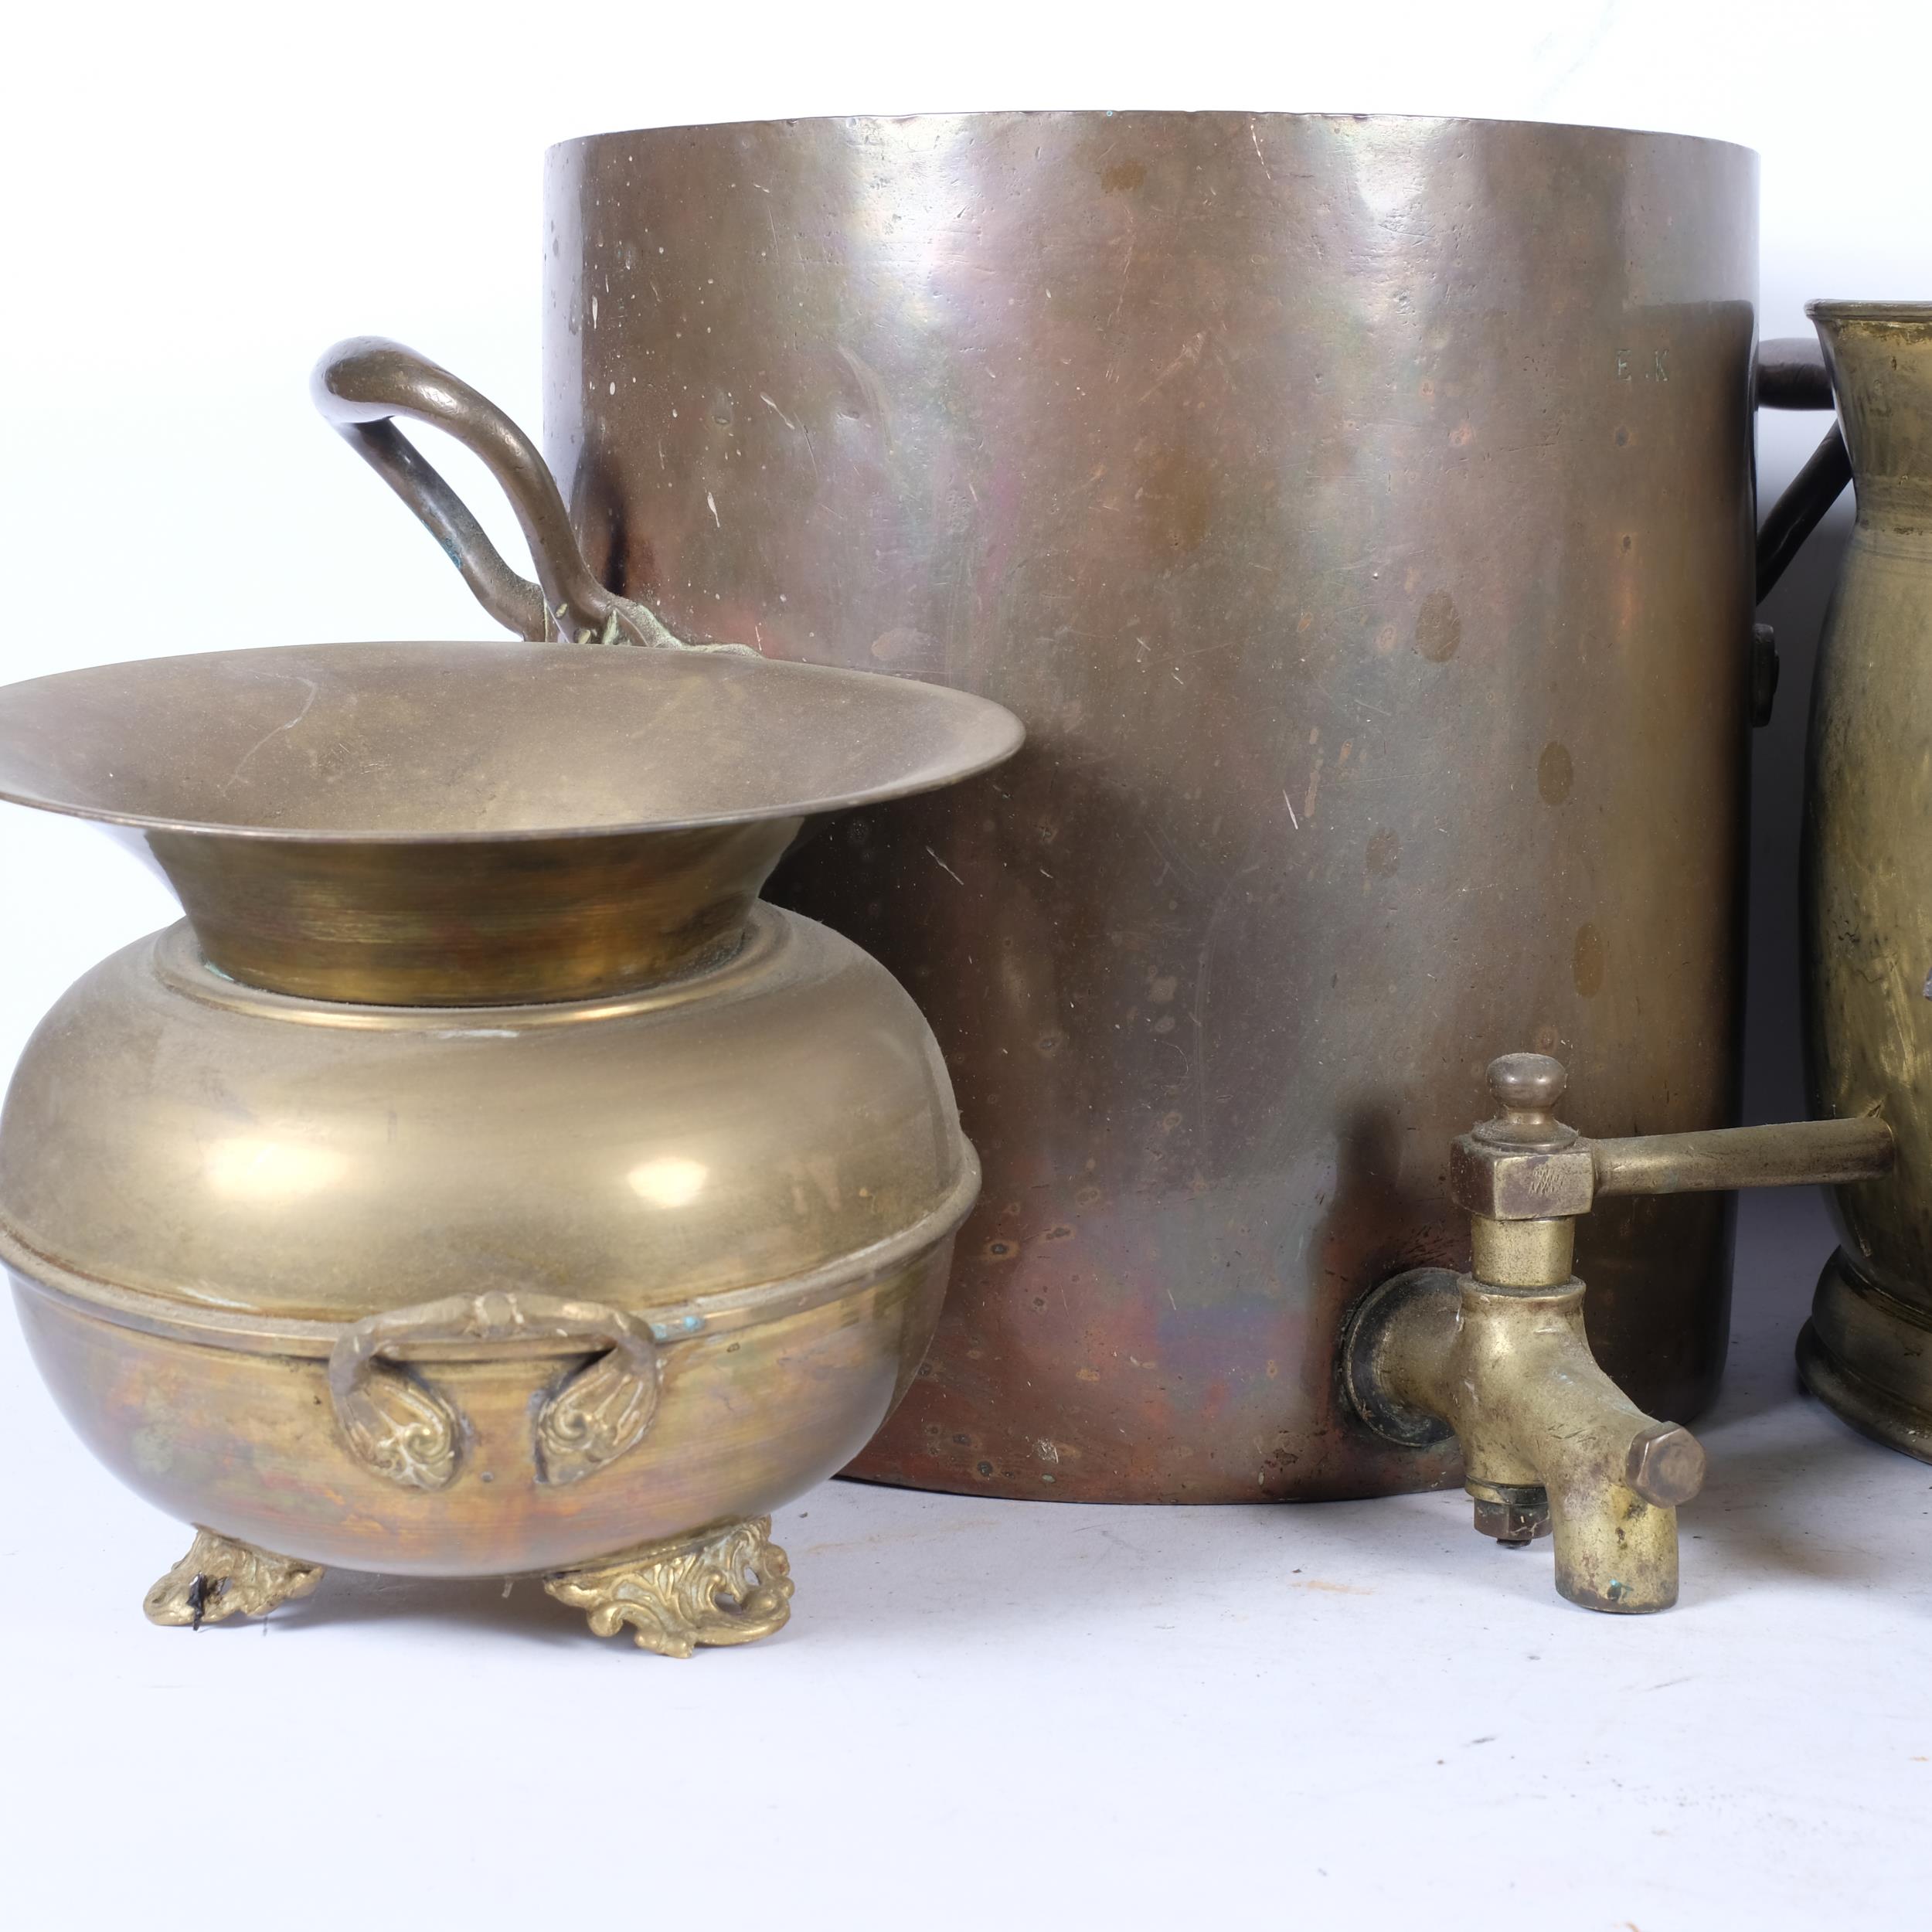 Vintage brass jugs, a spittoon, a brass tea urn, coal bucket, etc - Image 2 of 2